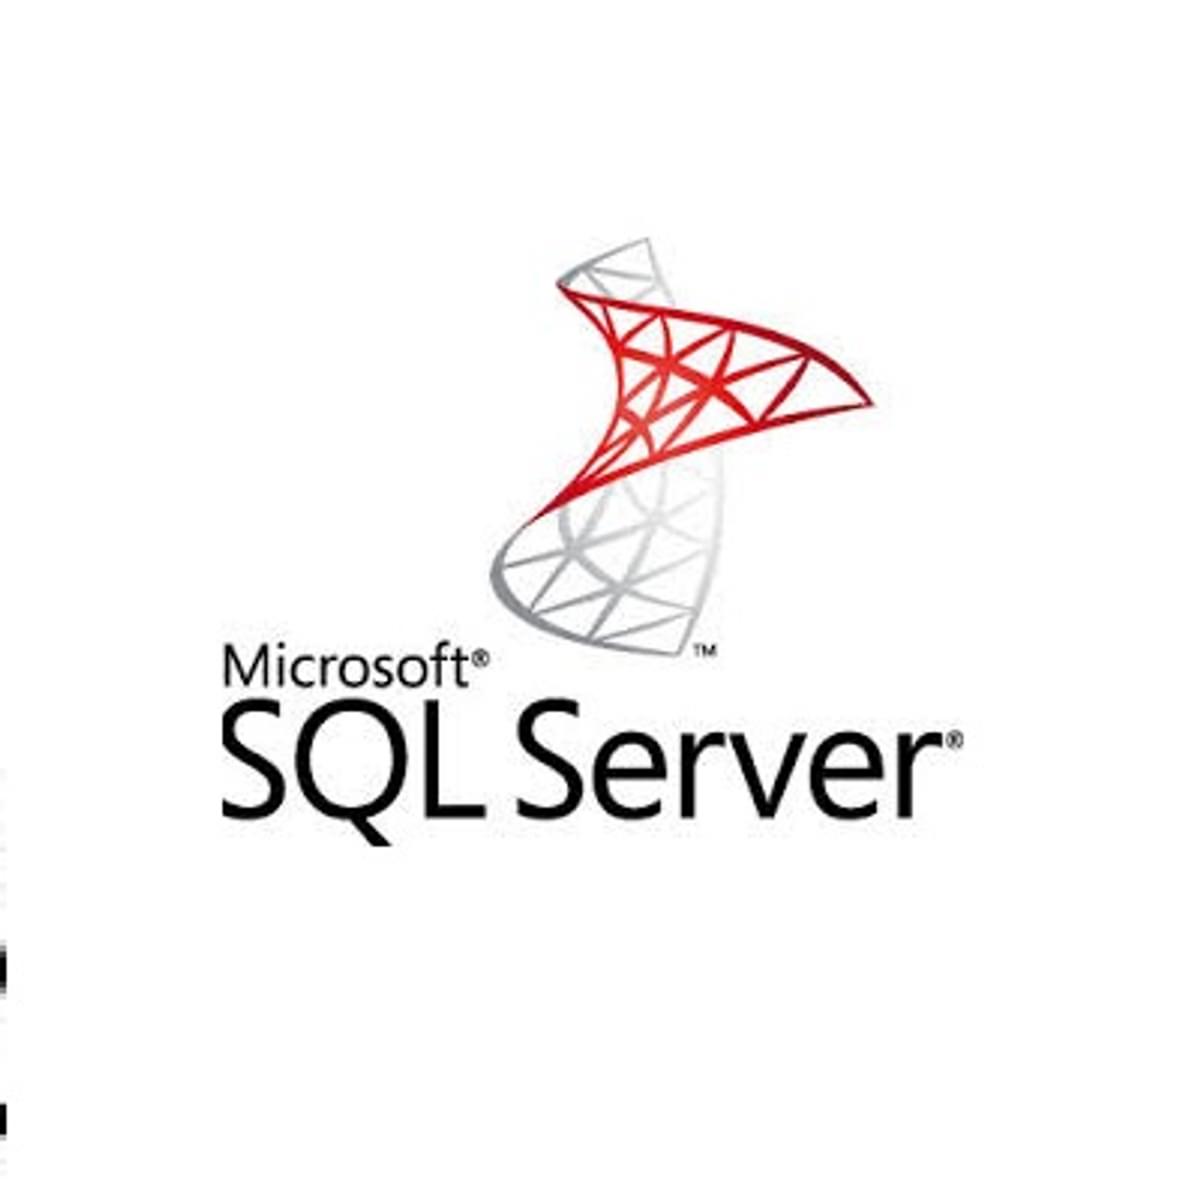 Nieuwe Microsoft SQL Server database cloud hosting service beschikbaar image